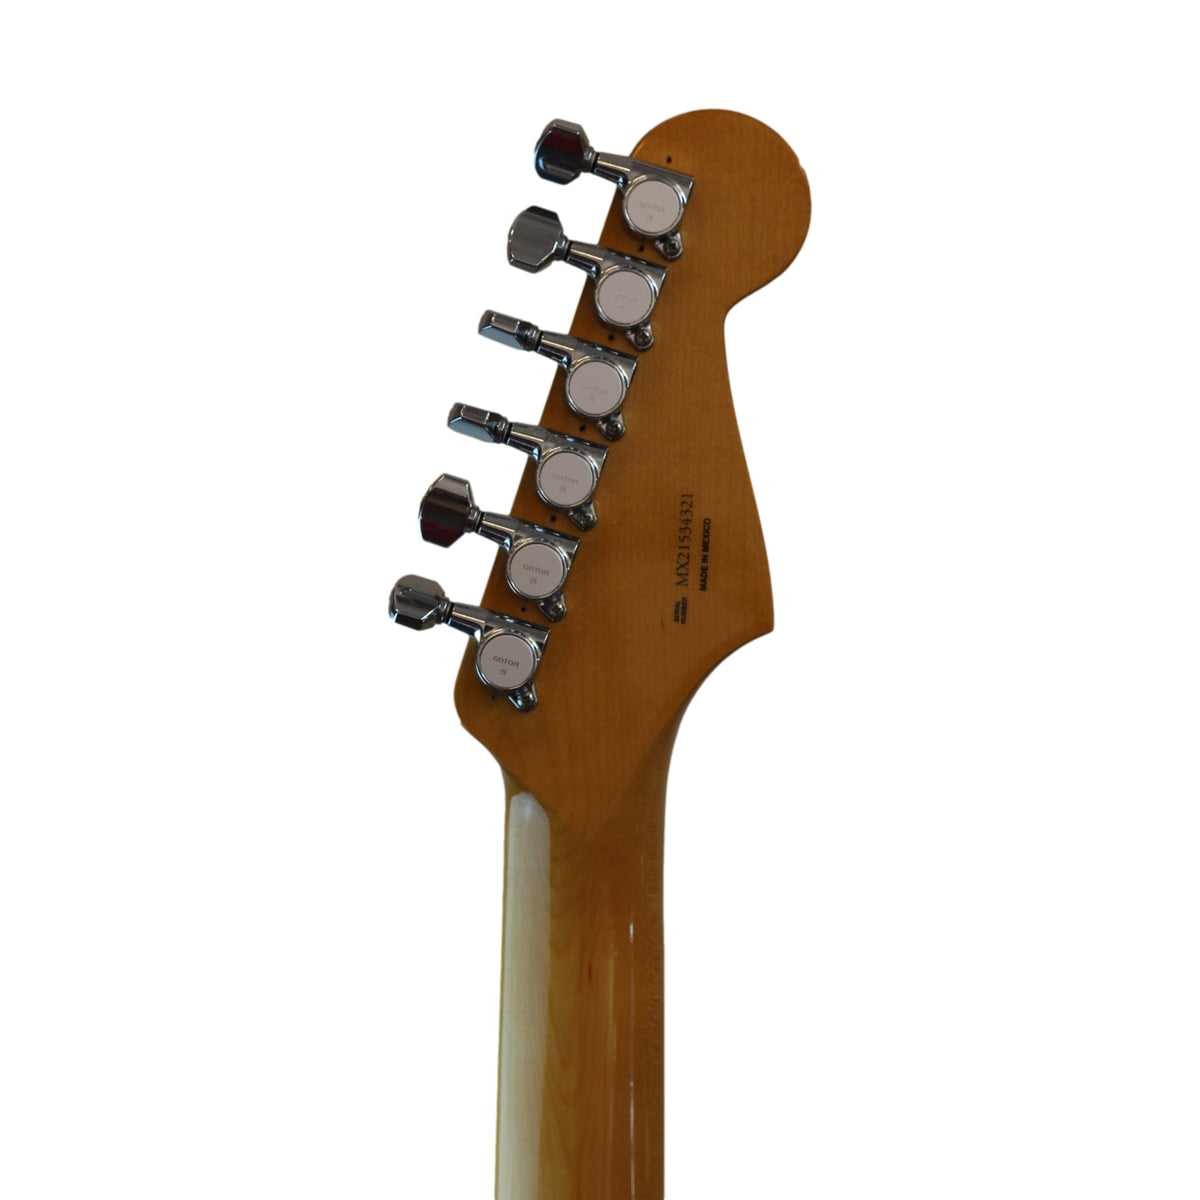 Used Fender Kurt Cobain Signature Jaguar Left Handed w/ Hard Case